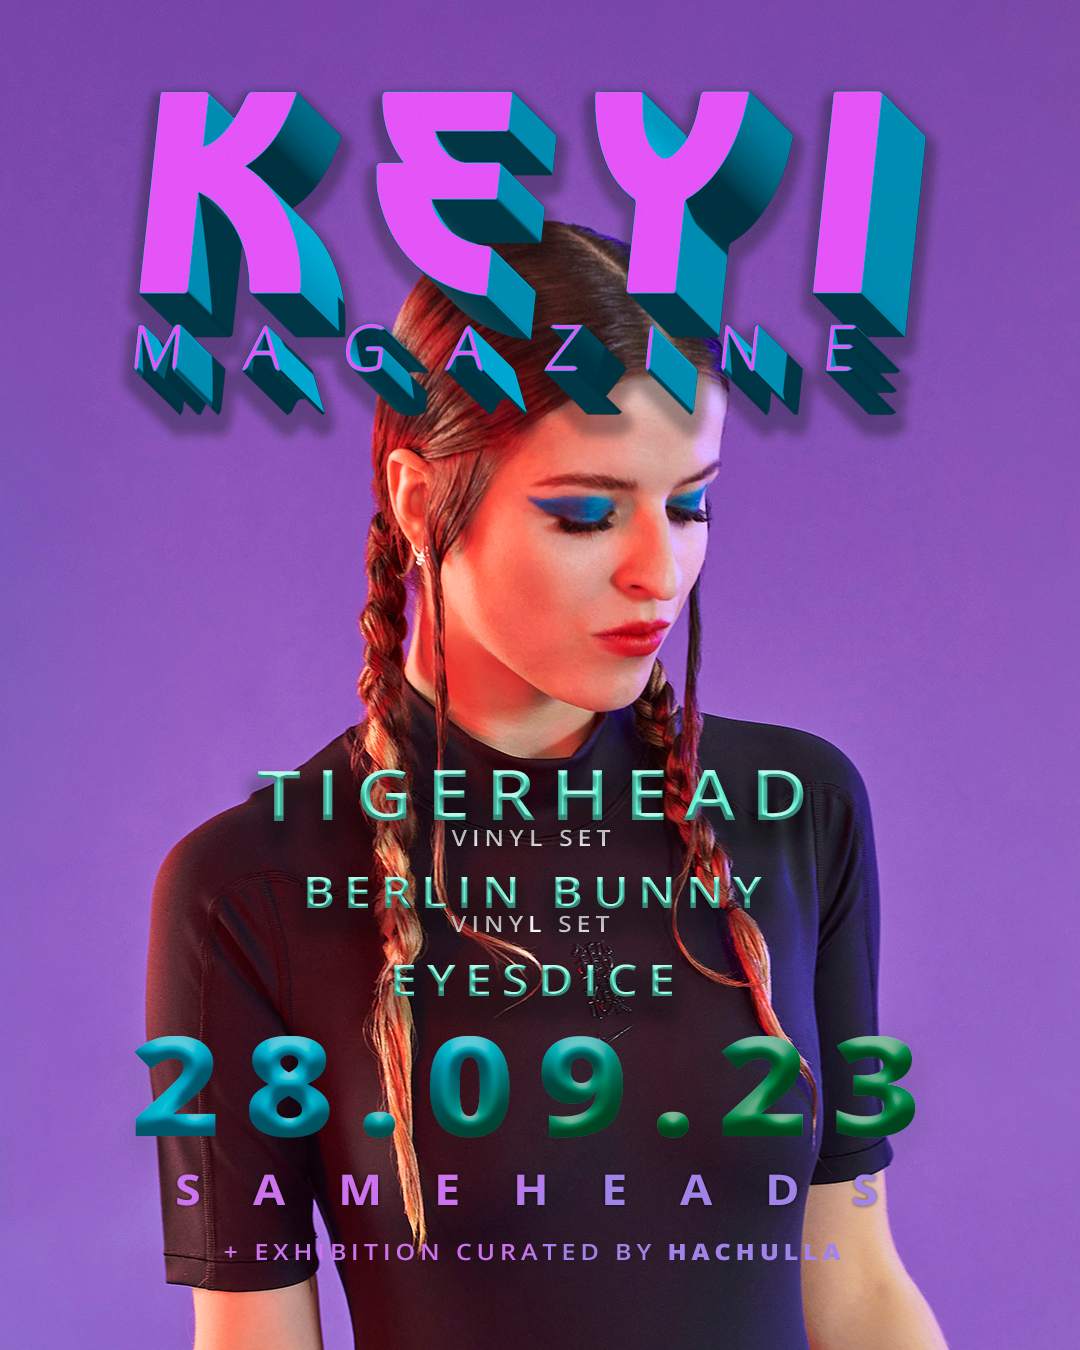 Keyi Magazine x Sameheads with Tigerhead vinyl set, Berlin Bunny vinyl set and Eyesdice + more - フライヤー表